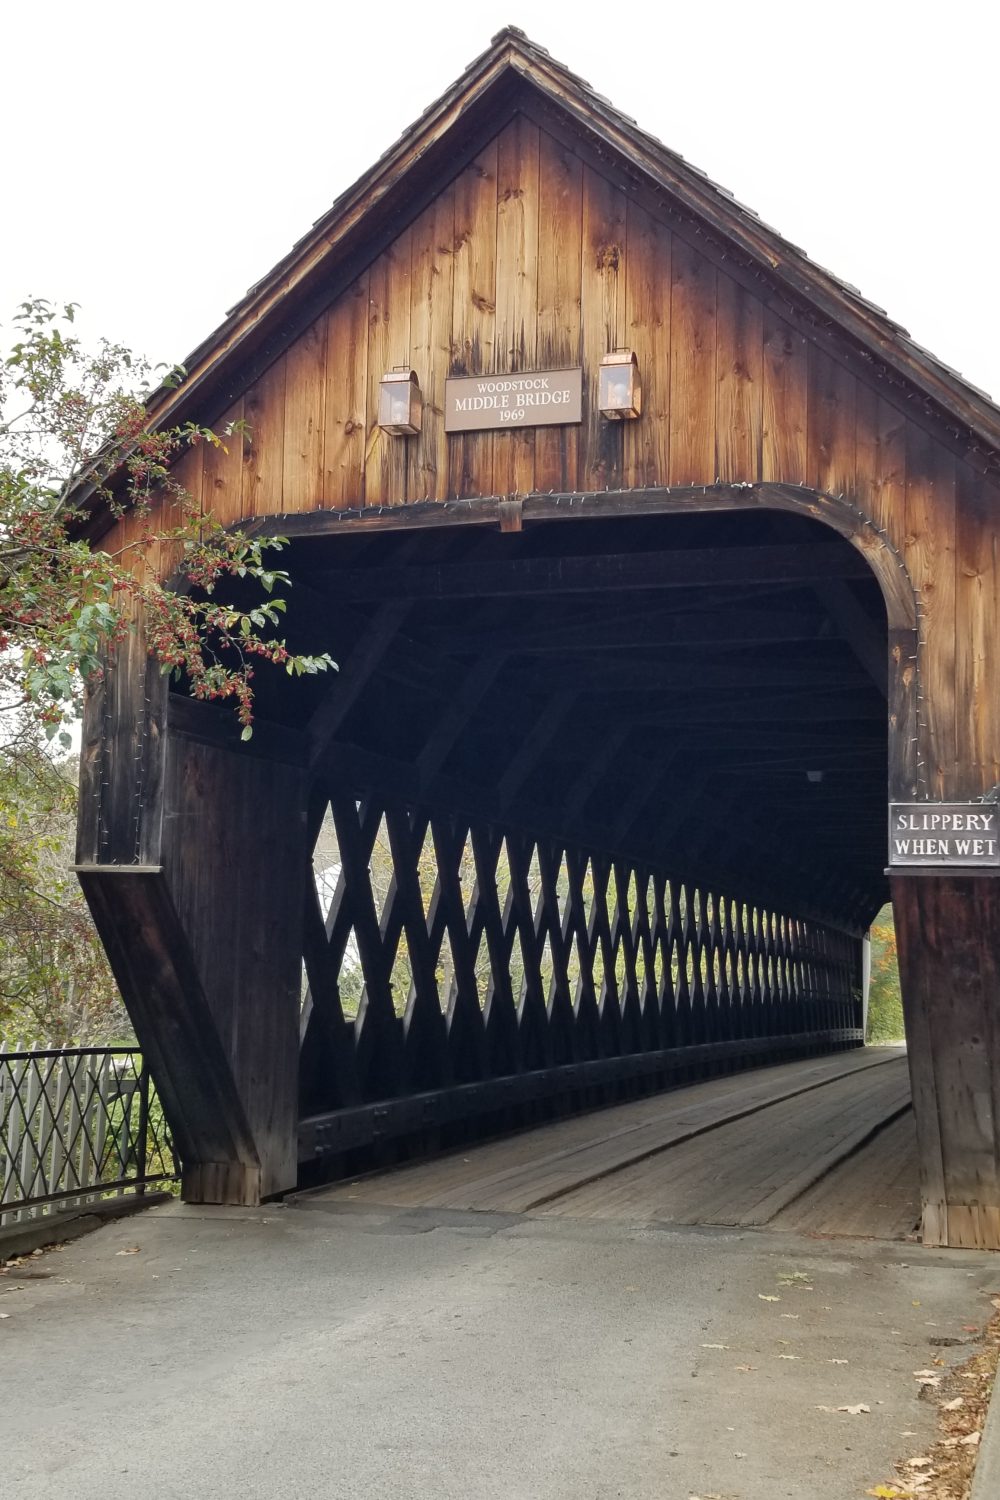 Middle Bridge in Woodstock, Vermont